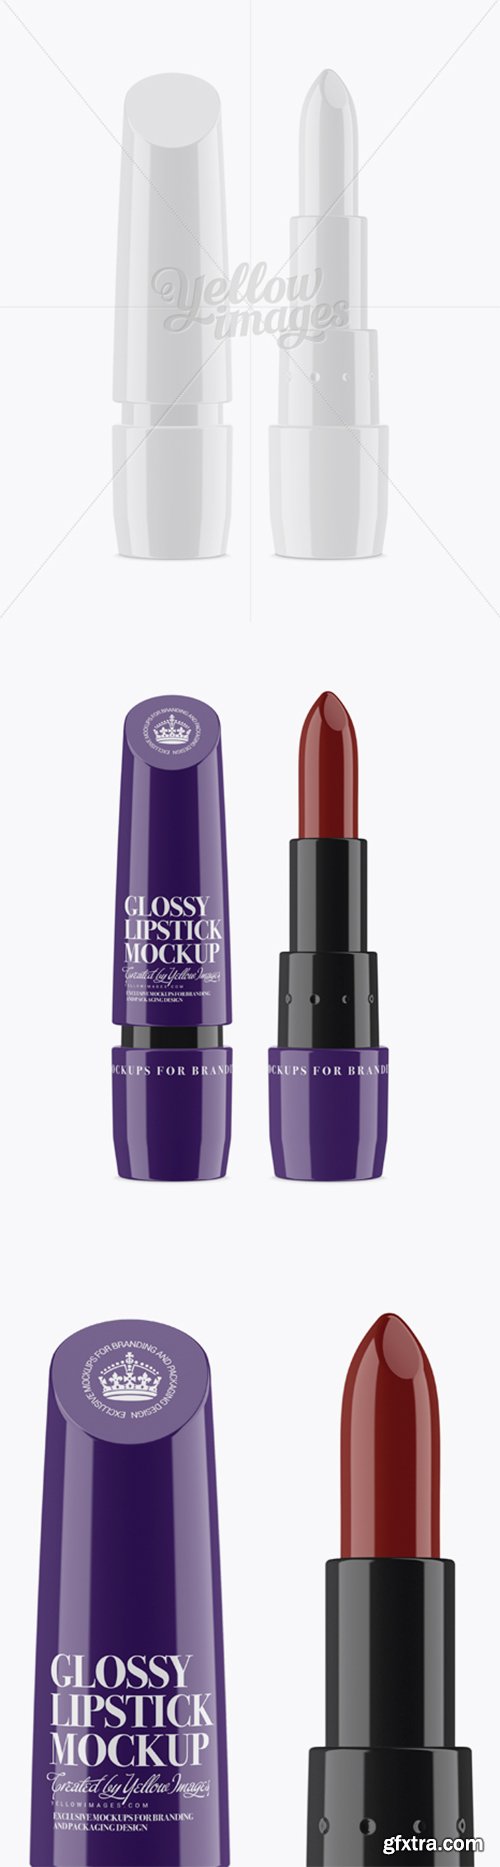 Glossy Lipstick Mockup 15191